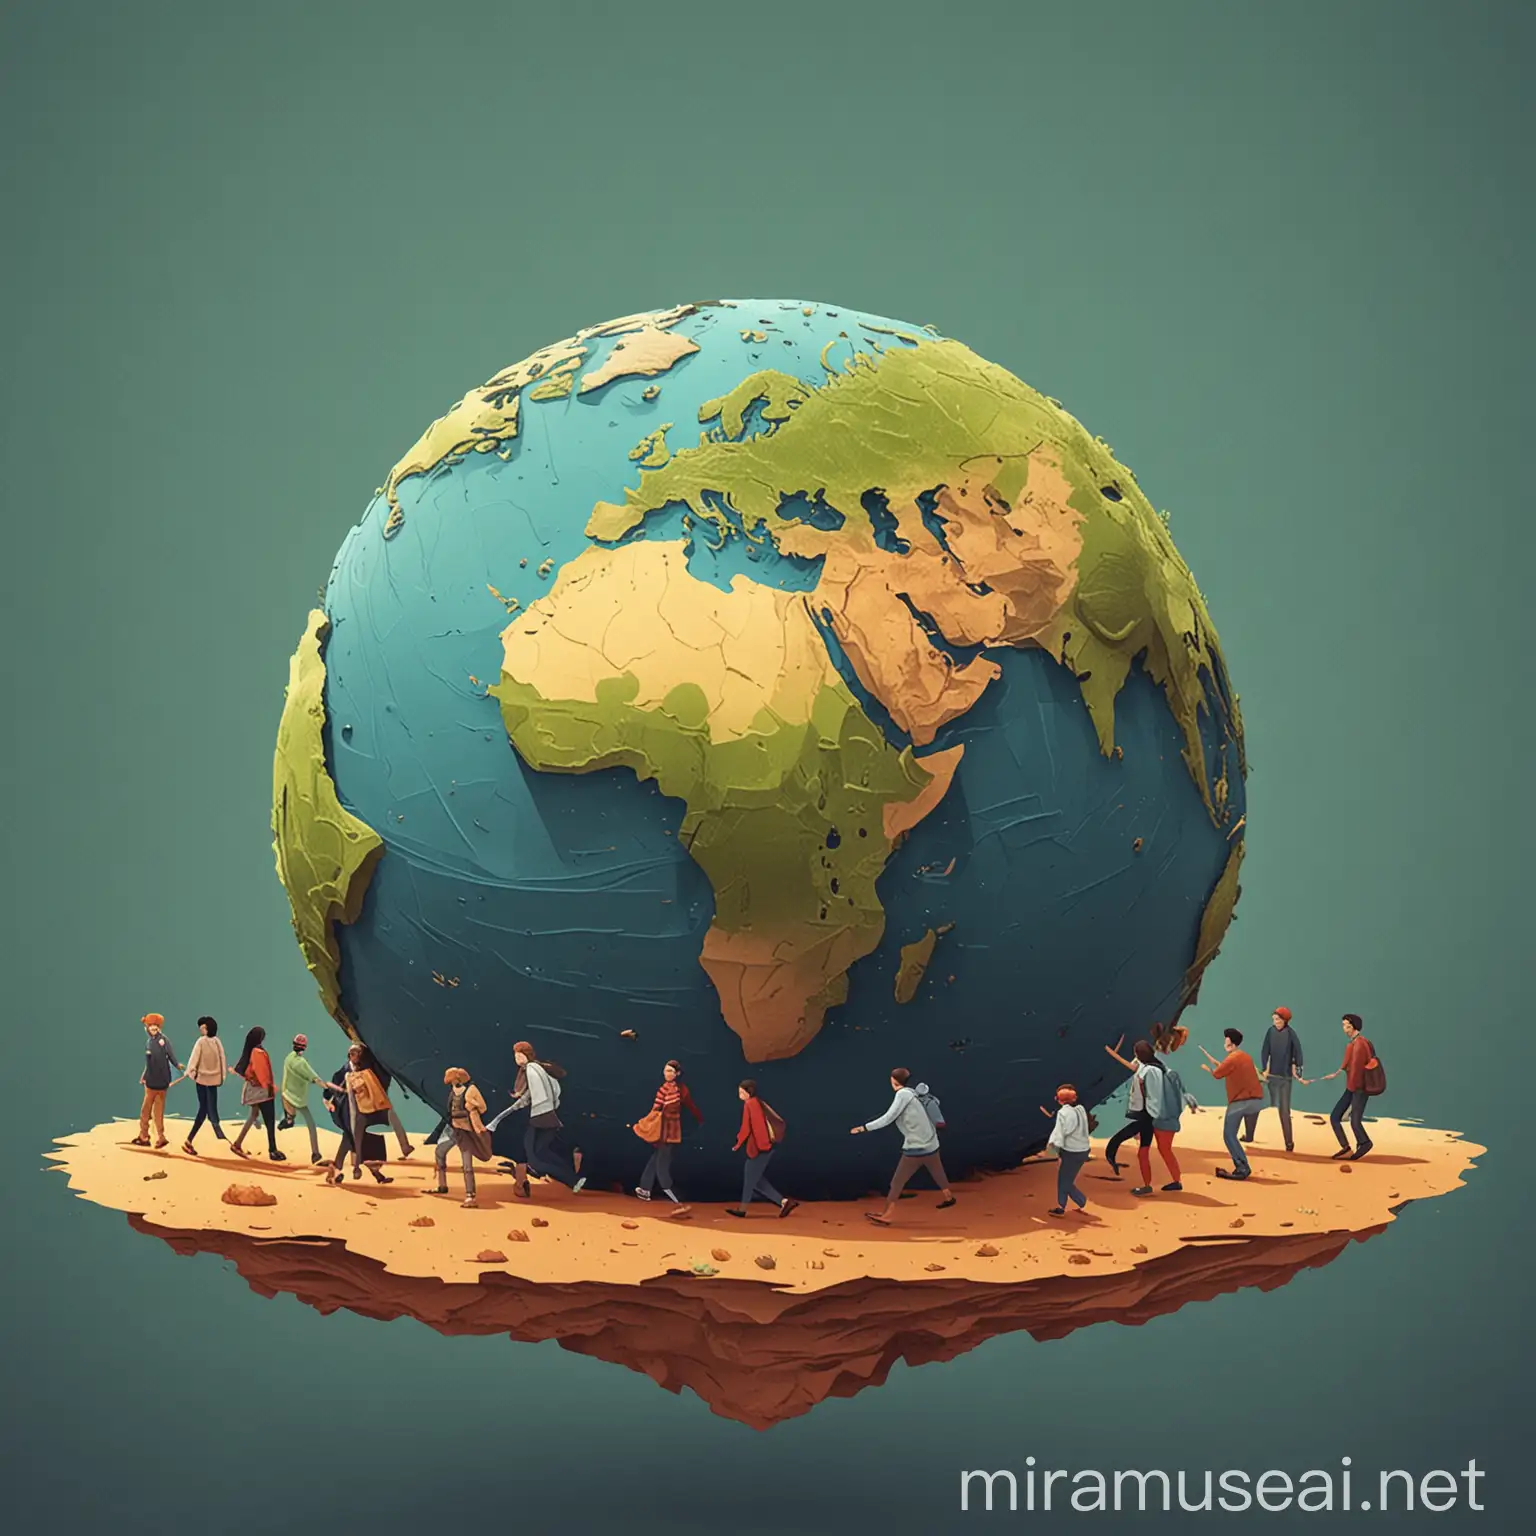 Global Unity Six People Surrounding Earth to Save It